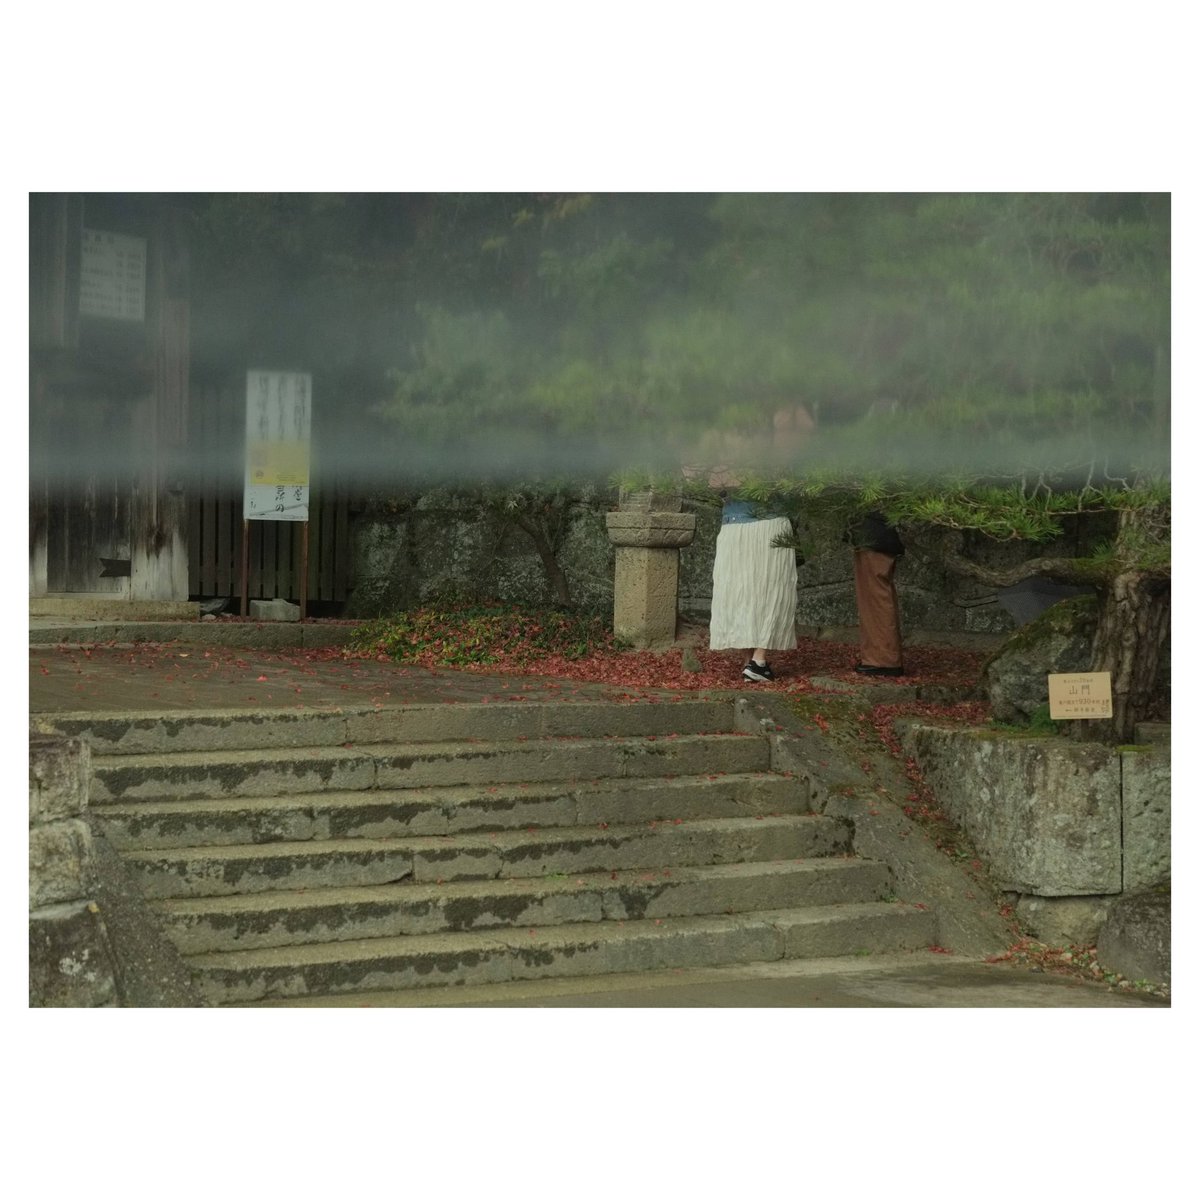 Nature Talk

----------------------

#fujifilm #fujifilm_us #fujifilm_japan #fujifilmxpro1 #photography #japan #japantrip #japanphotography #yamadera #travel #nature #temple #rain #umbrella #negativespace #saulleiterinspired #person #people #peoplephotography #candid